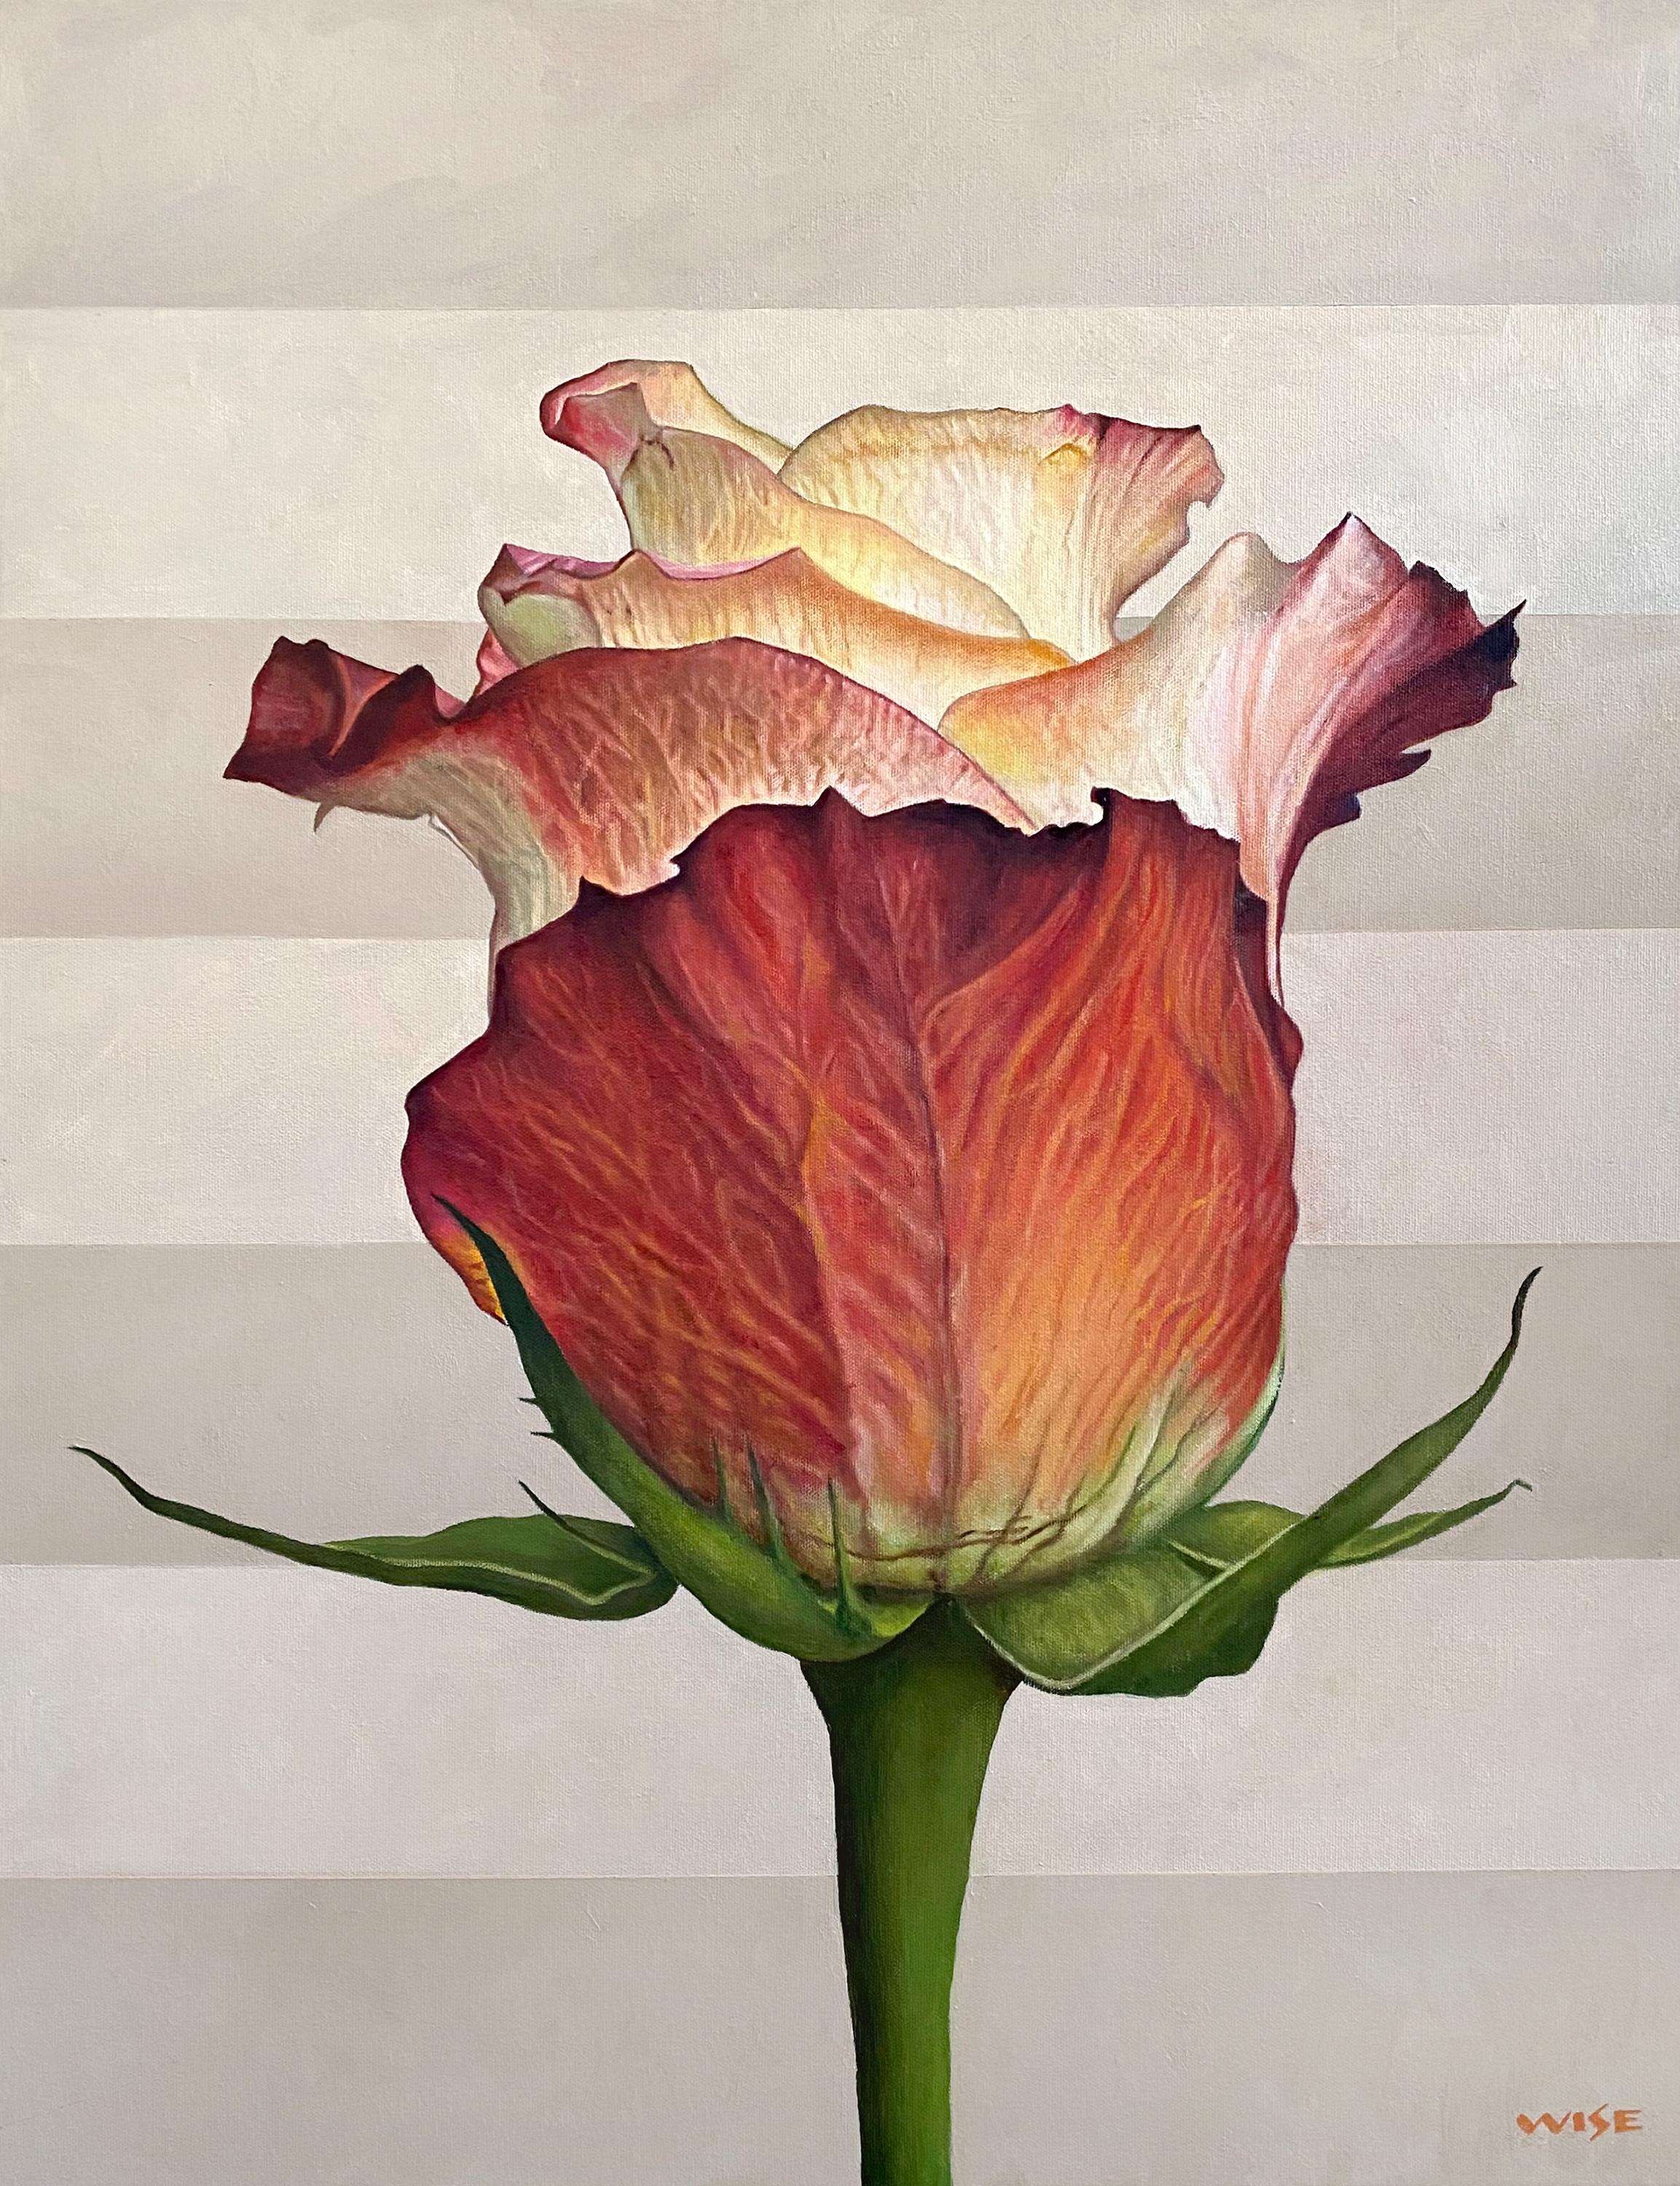 Jim Wise Still-Life Painting - "Babylon" - rose painting, still life, botanical realism - Georgia O'Keeffe